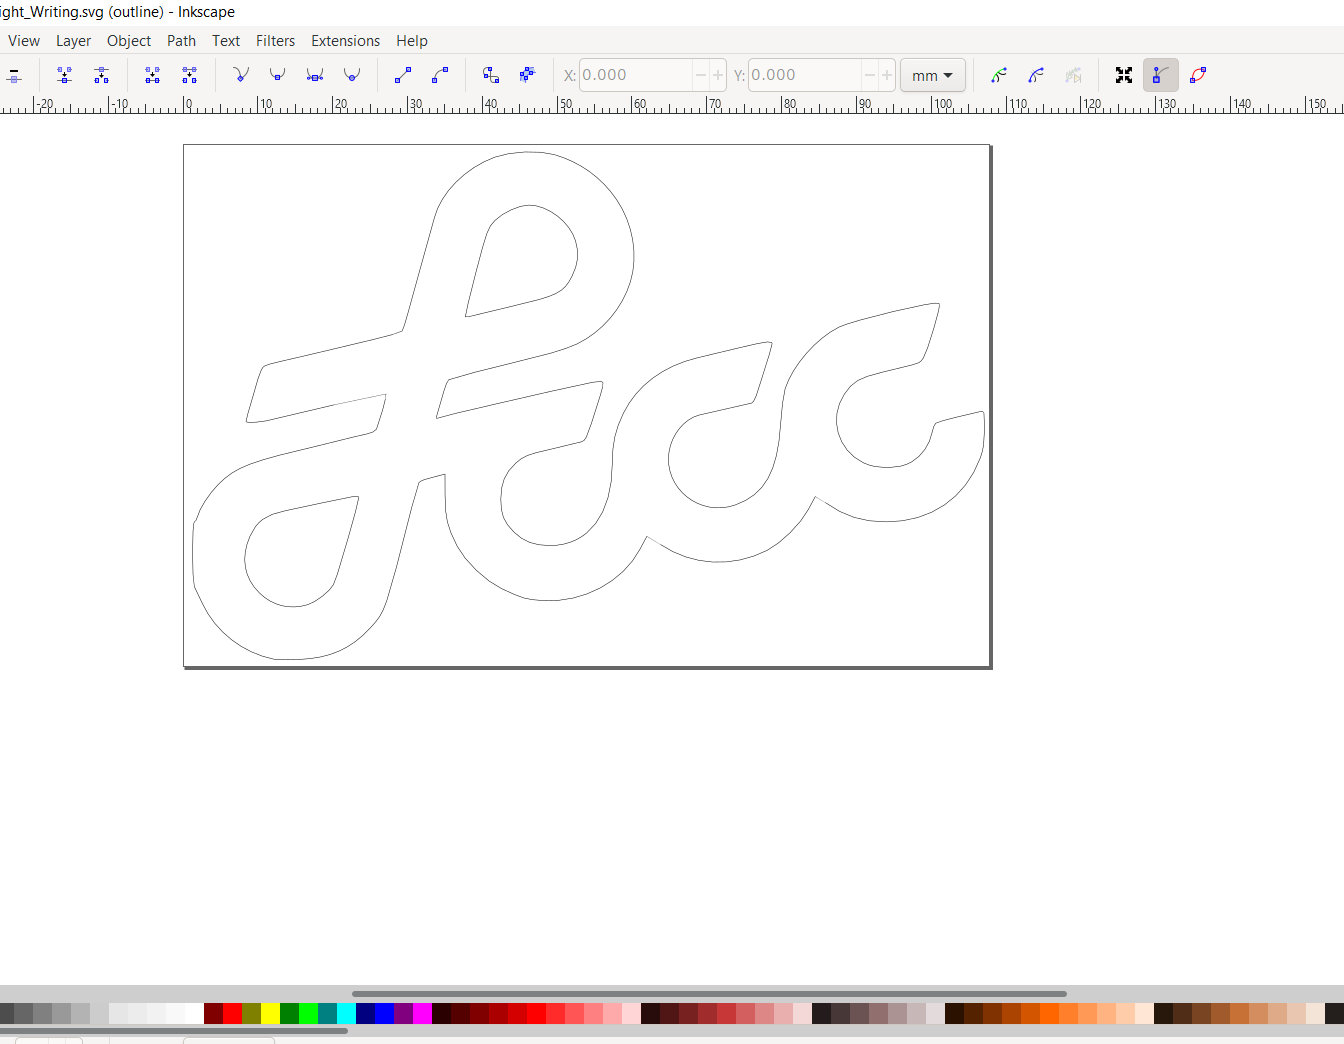 LCCC Logo in Inkscape="LCCC Logo in Inkscape"